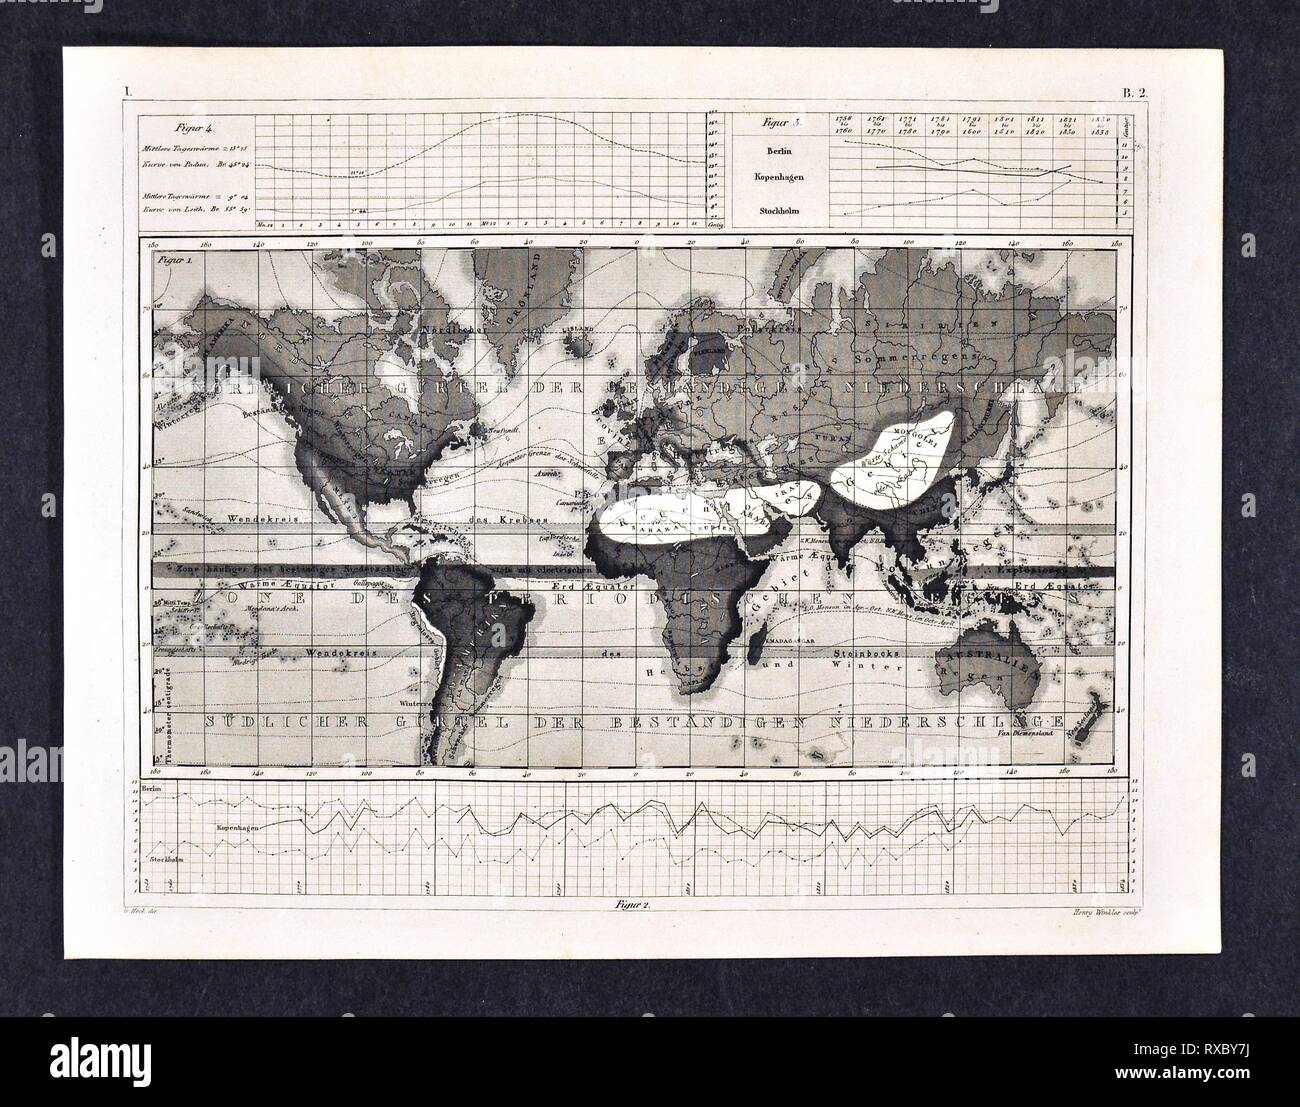 1849 Bilder Atlas Map World Rainfall and Climate Zones Stock Photo